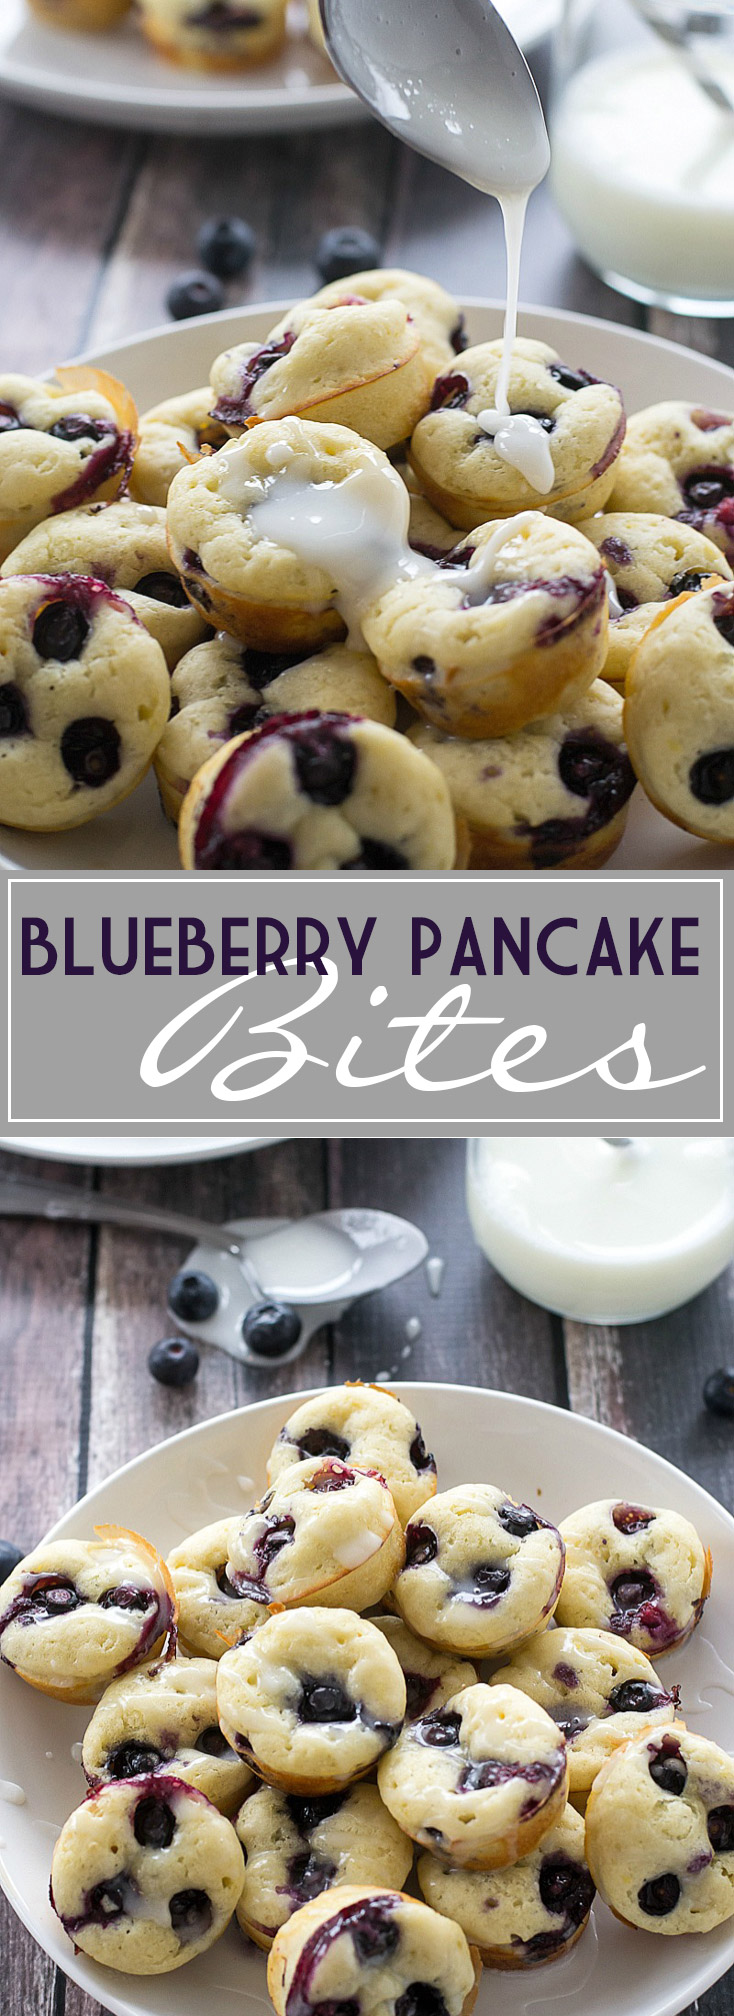 Blueberry Pancake Bites | www.motherthyme.com